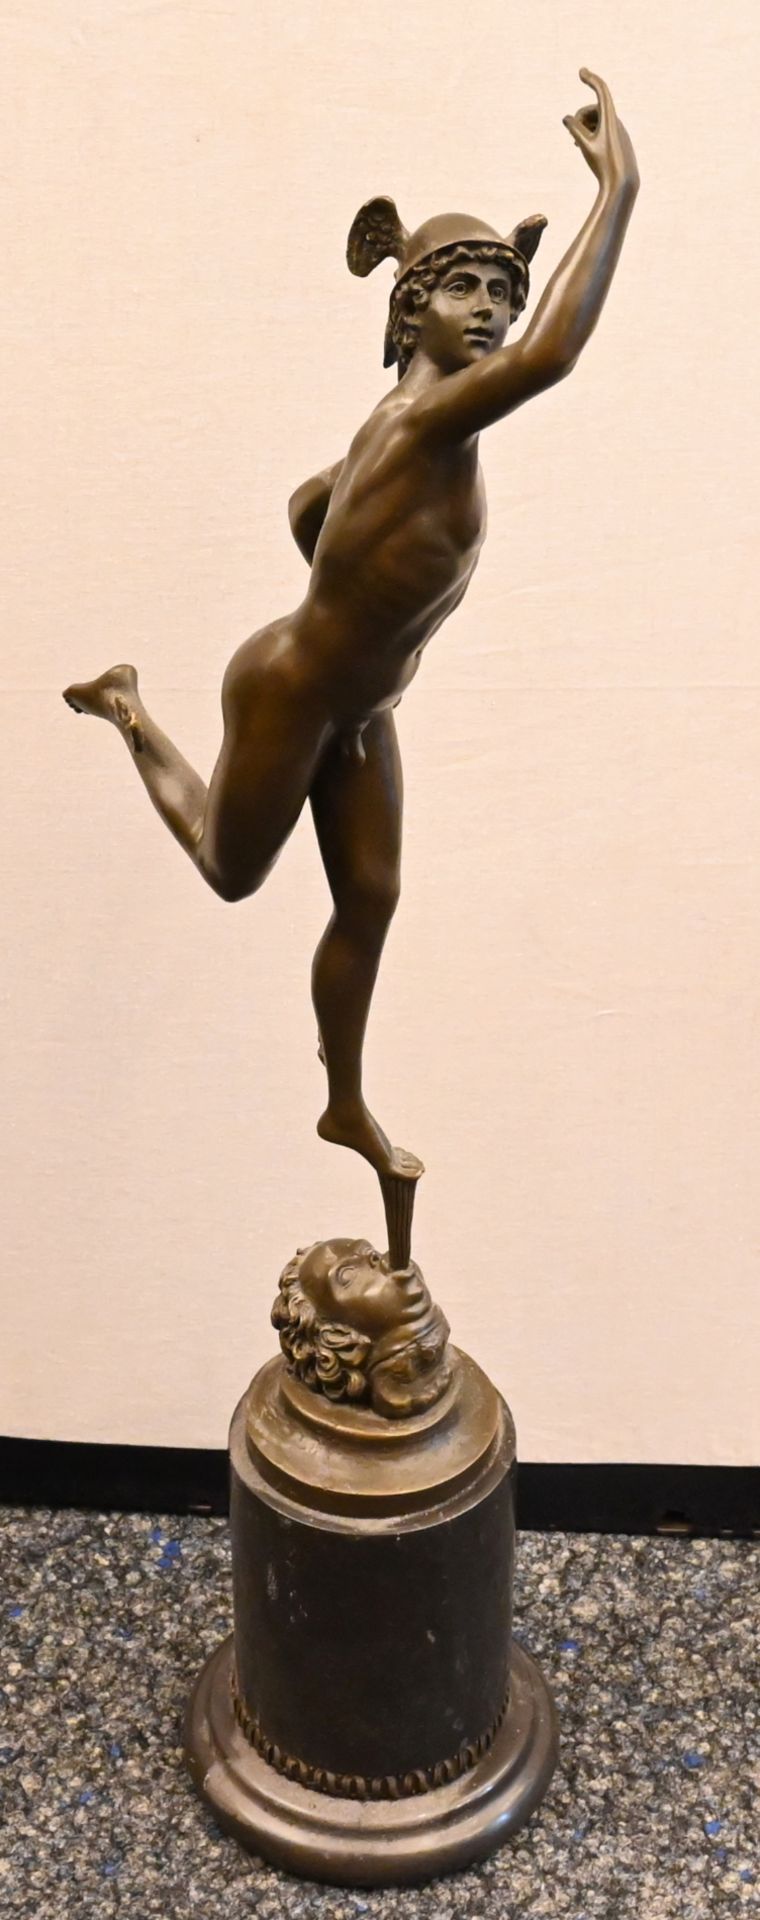 1 Statuette Bronze "Hermes" Replik nach Giambologna, H ca. 69cm auf rundem Marmorsockel,